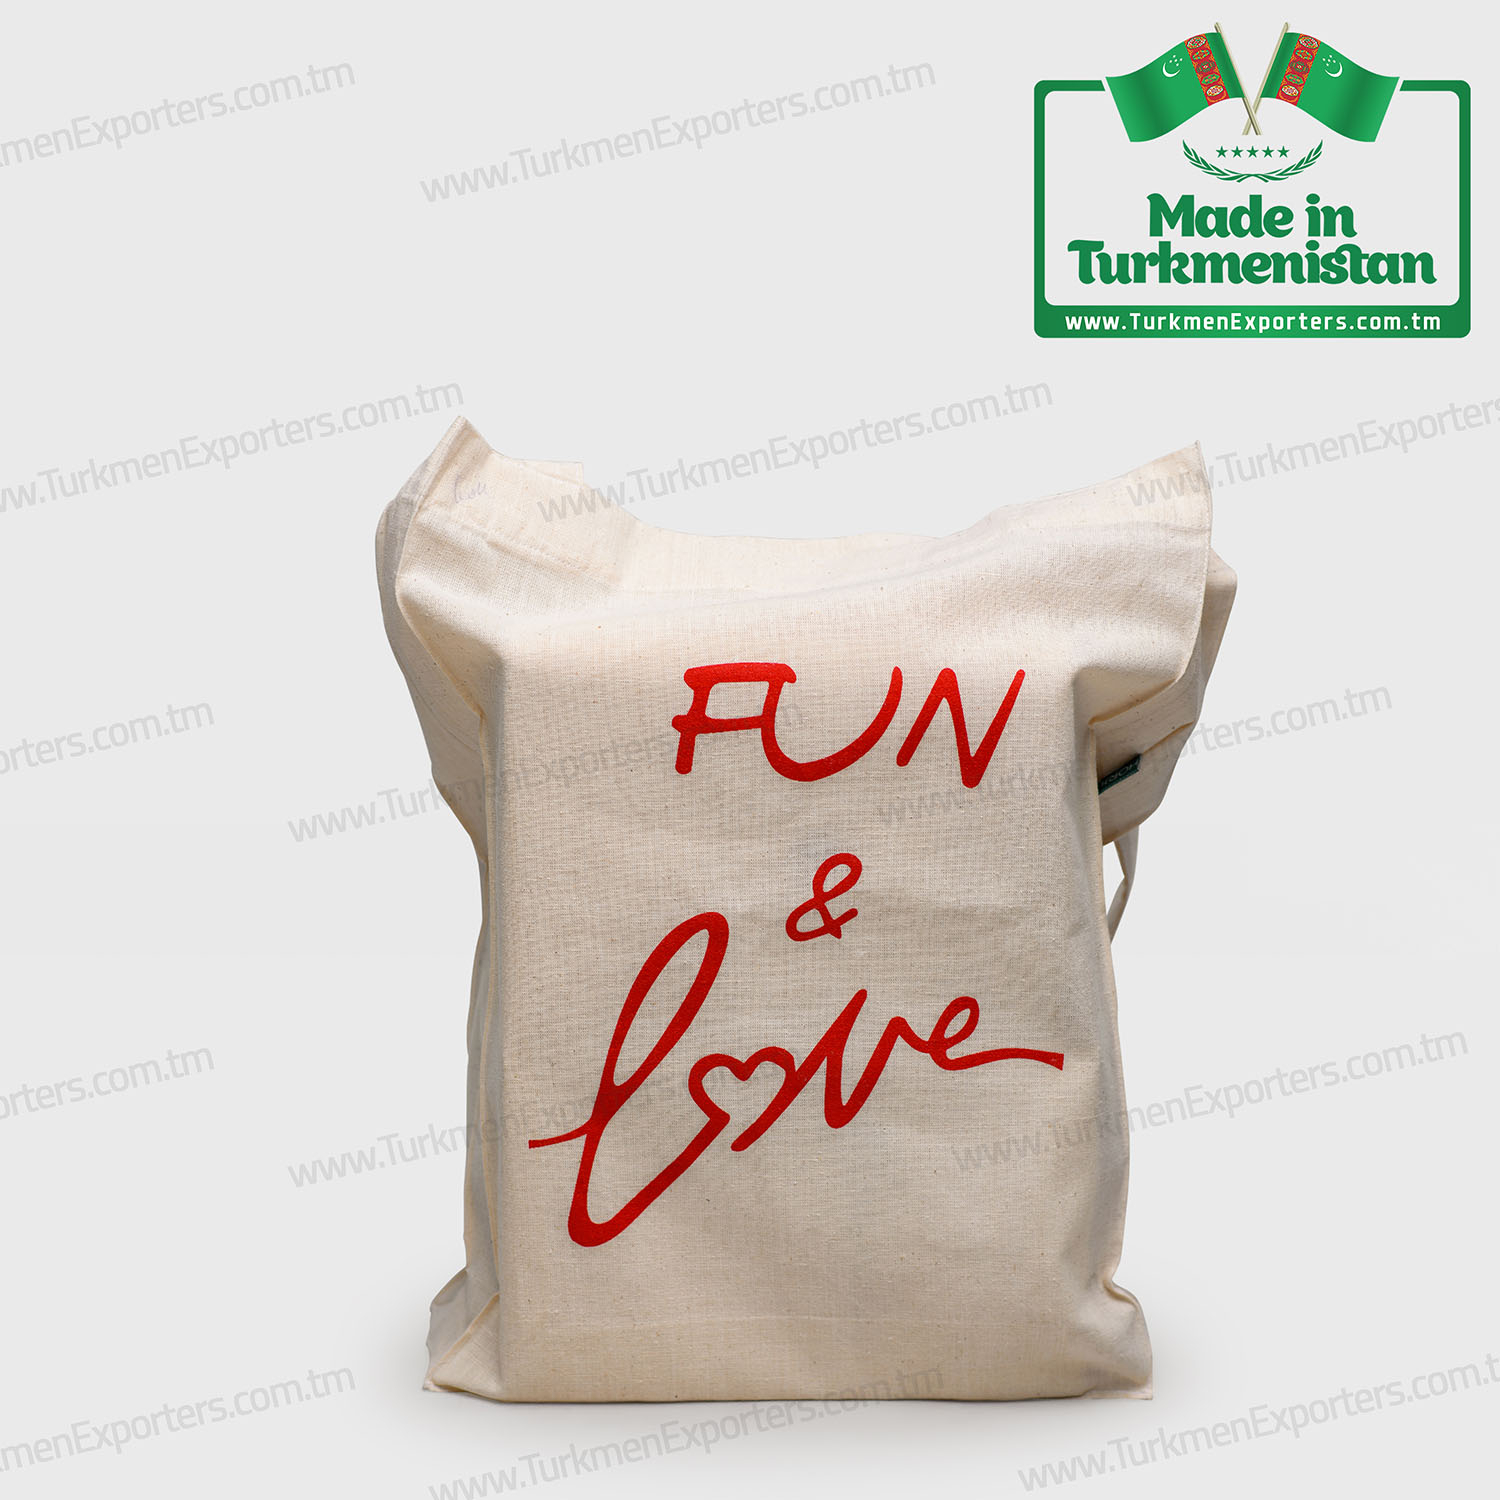 Eco cotton bag for export from Turkmenistan | Horjun Eco Bag